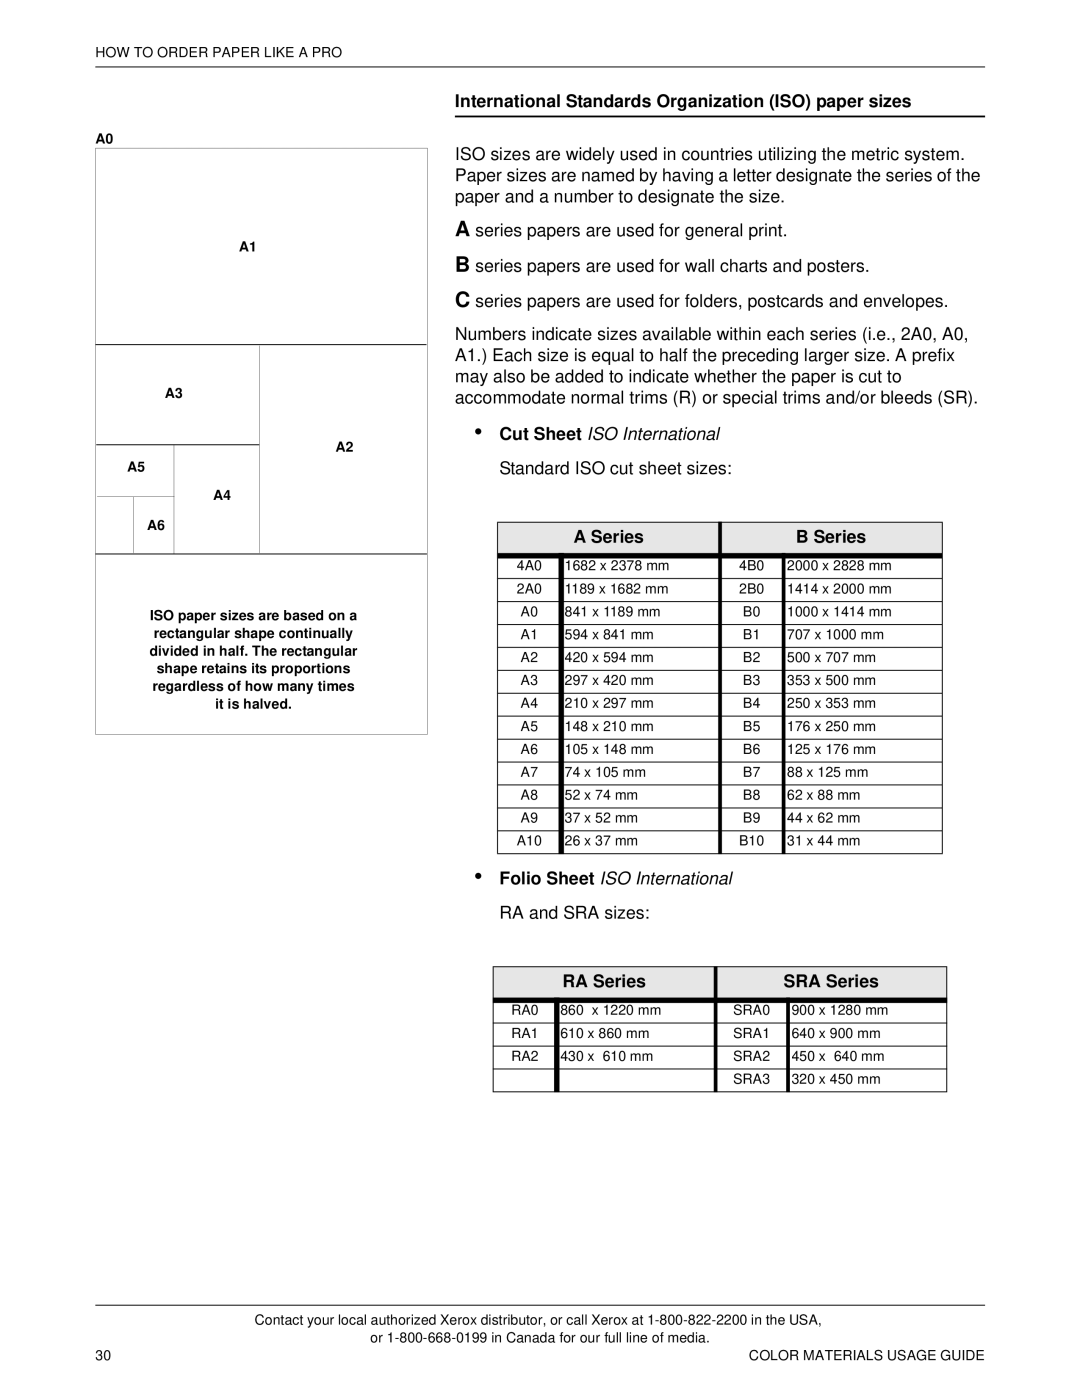 Xerox 12 manual B Series, Folio Sheet ISO International RA and SRA sizes, SRA Series 